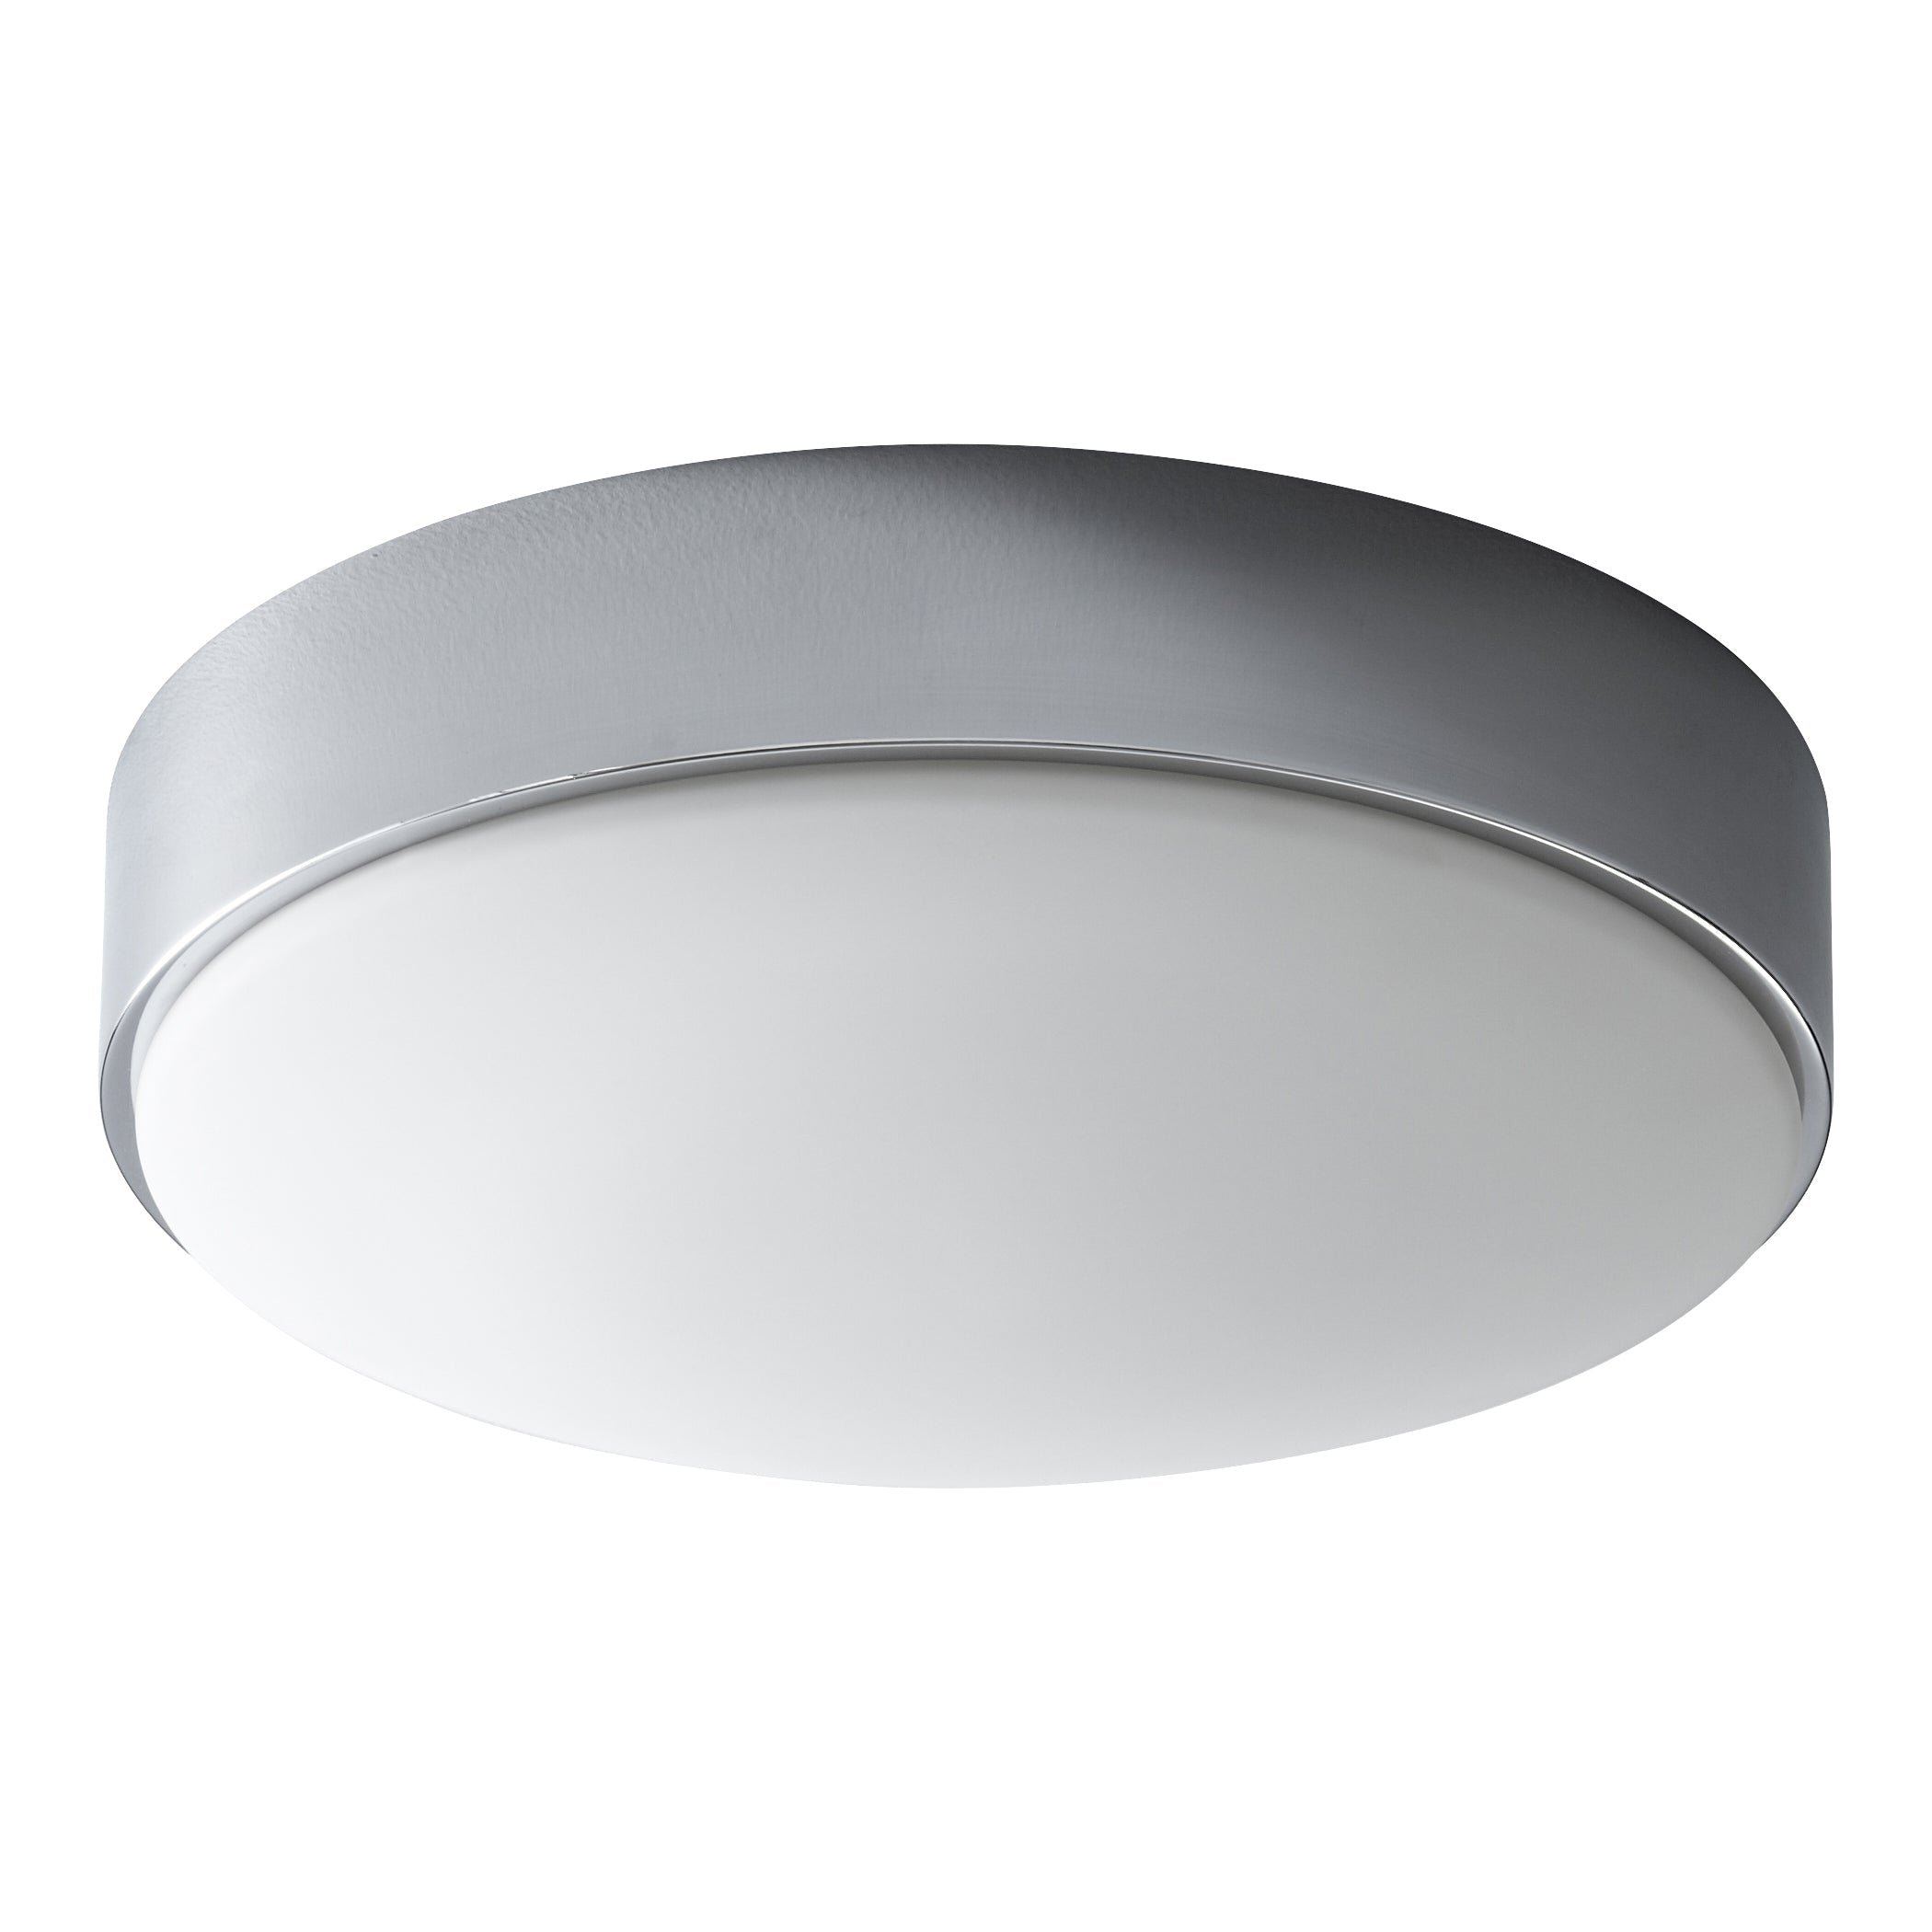 Oxygen JOURNEY 3-626-14 Flush Mount LED Ceiling Light Fixture, 14 Inch - Polished Chrome